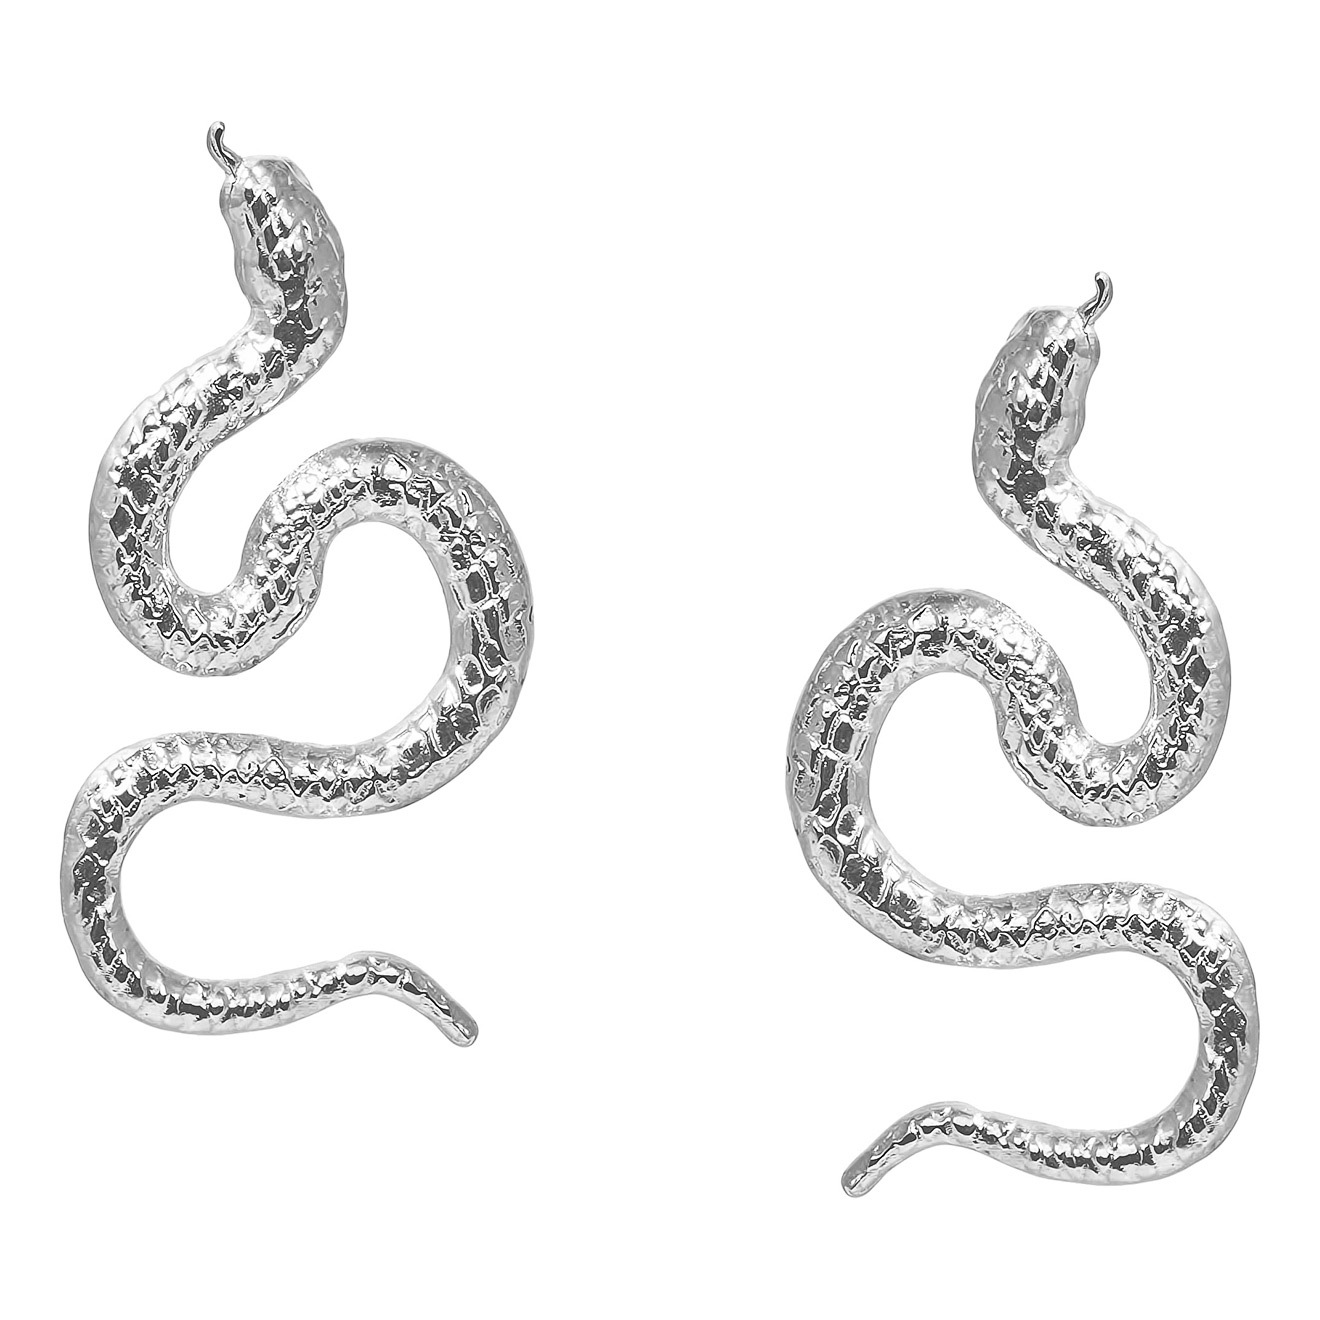 Natia x Lako Покрытые серебром серьги-змеи natia x lako покрытые серебром серьги змеи